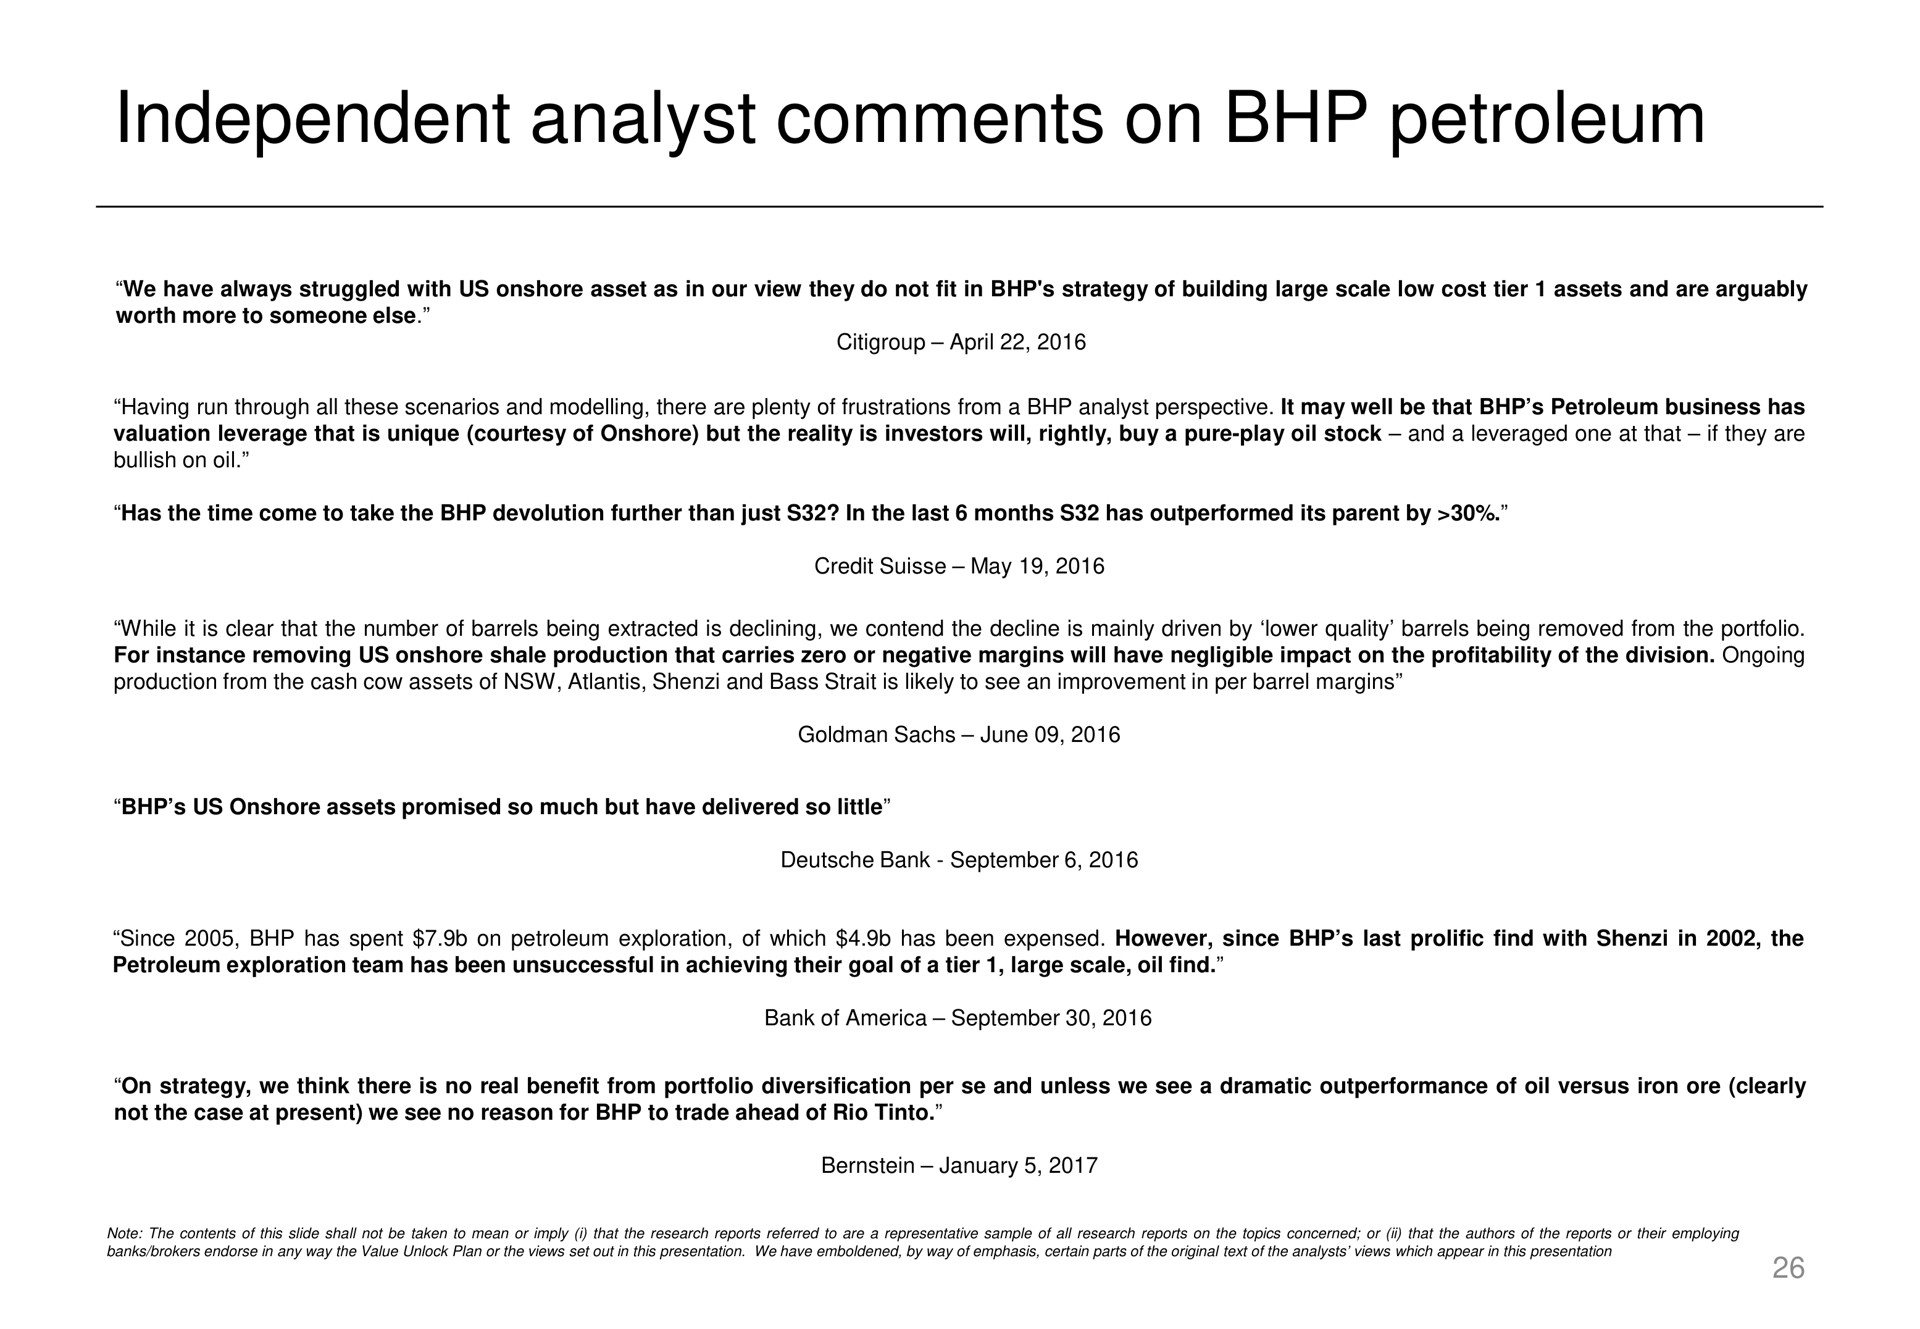 independent analyst comments on petroleum | Elliott Management